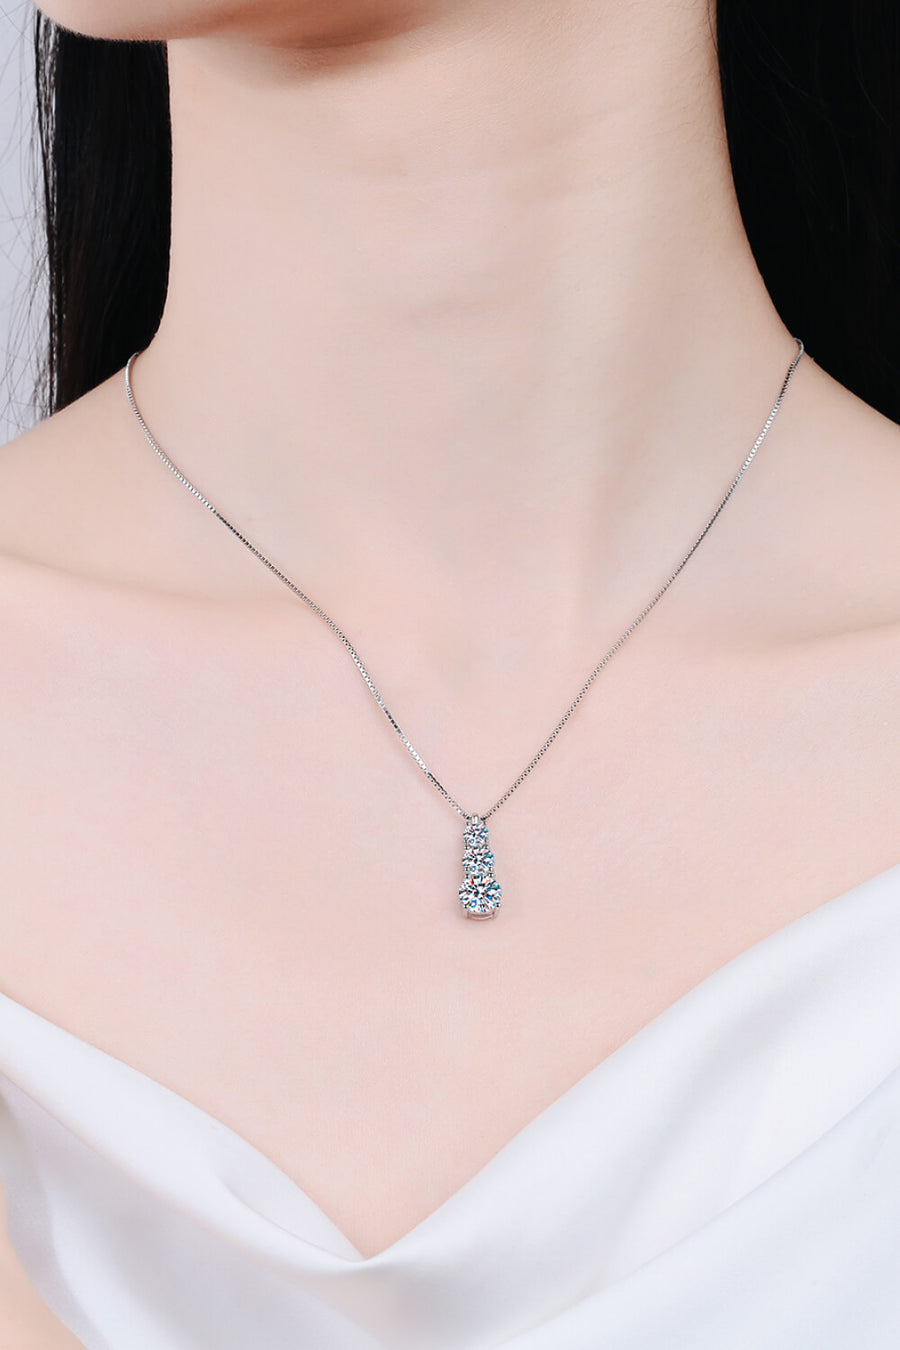 1# BEST Diamond Necklace Earrings Jewelry Bundle Set Gift for Women | #1 Best Most Top Trendy Trending Diamond Necklace, Earrings Jewelry Gift for Women, Mother, Wife, Daughter, Ladies | MASON New York